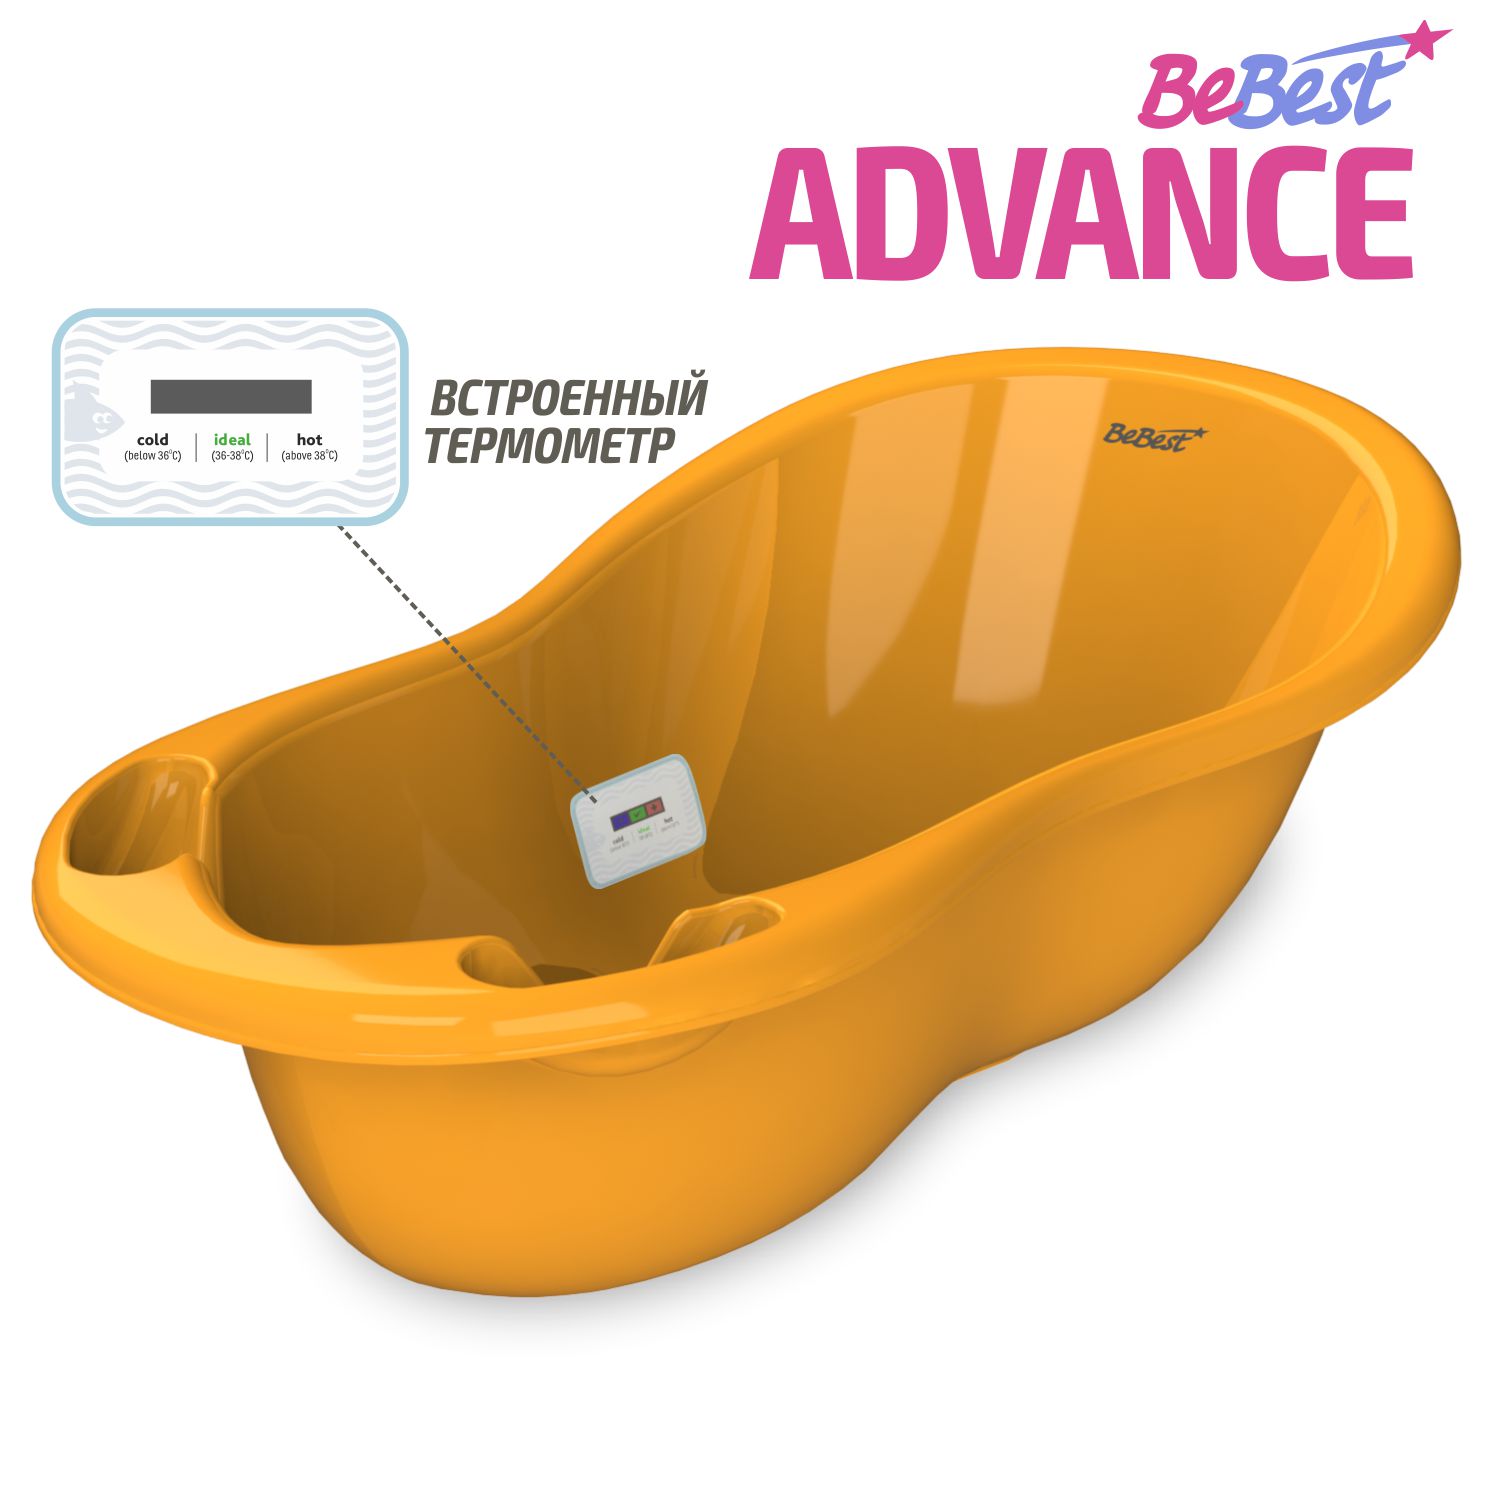 Ванночка для купания BeBest Advance с термометром оранжевый - фото 1